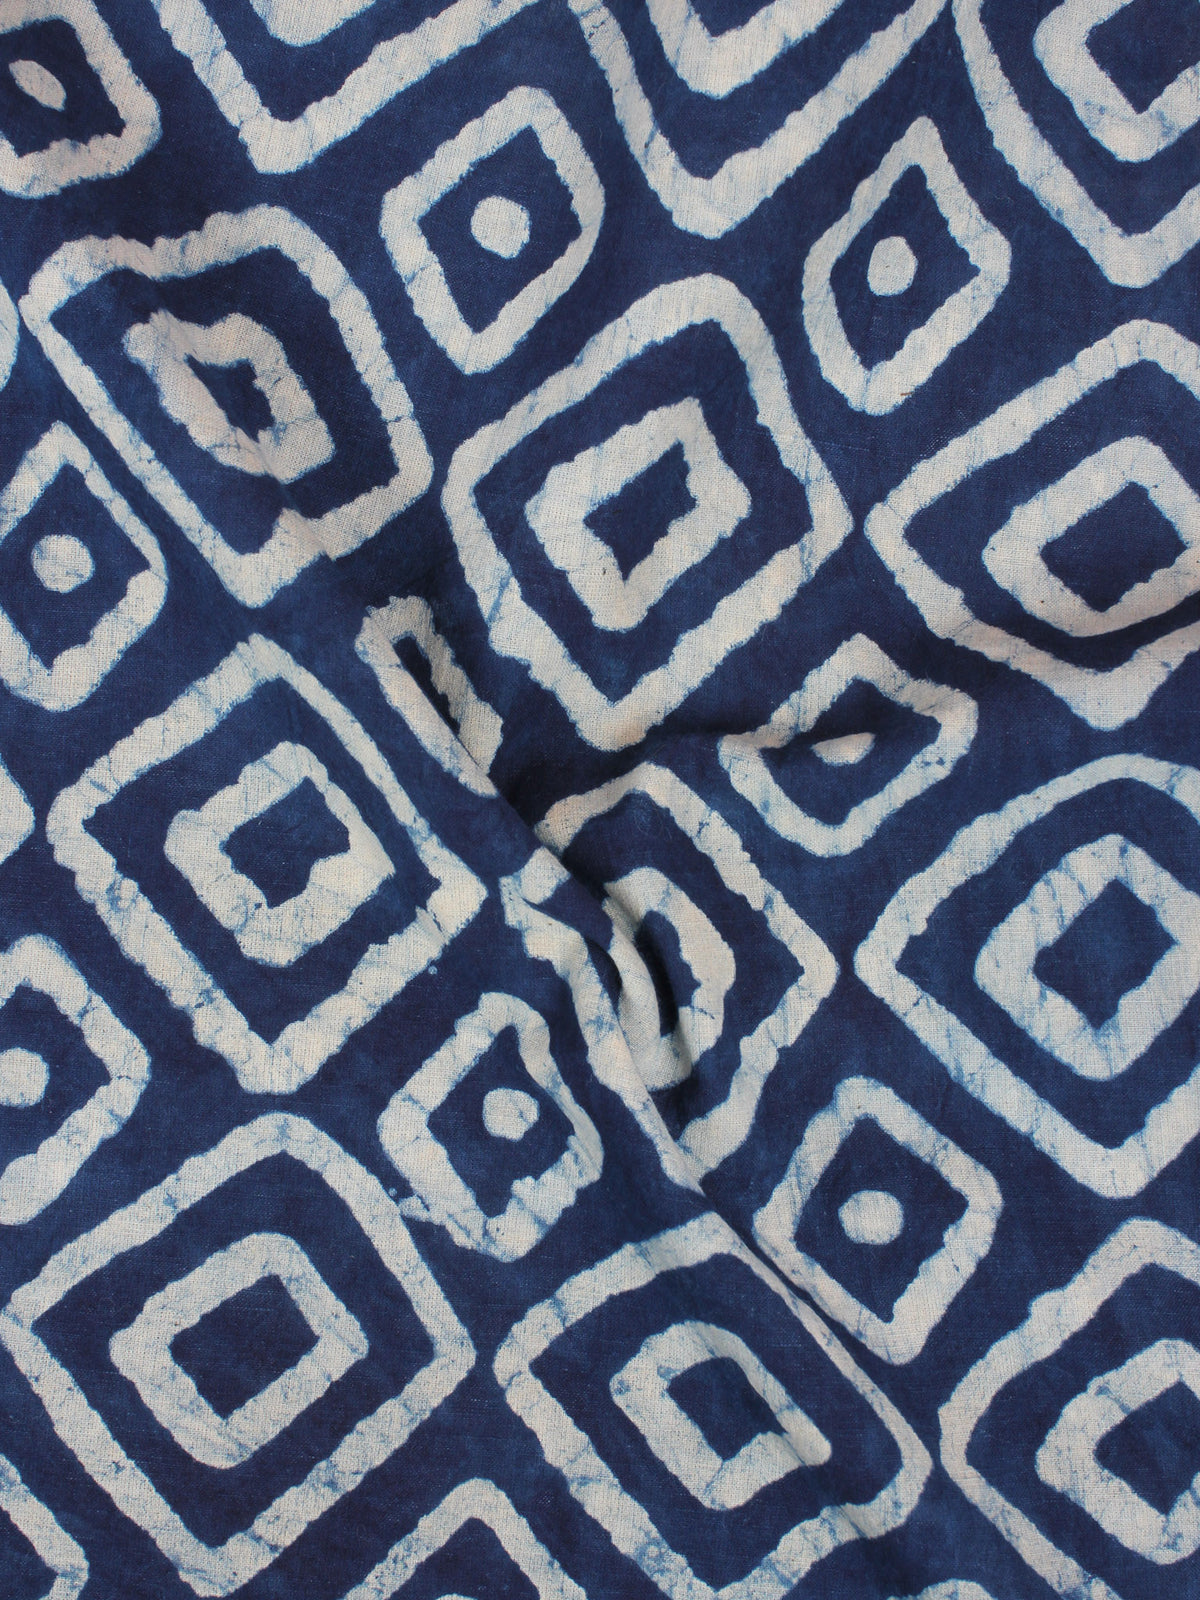 Indigo White Hand Block Printed Cotton Fabric Per Meter - F0916354